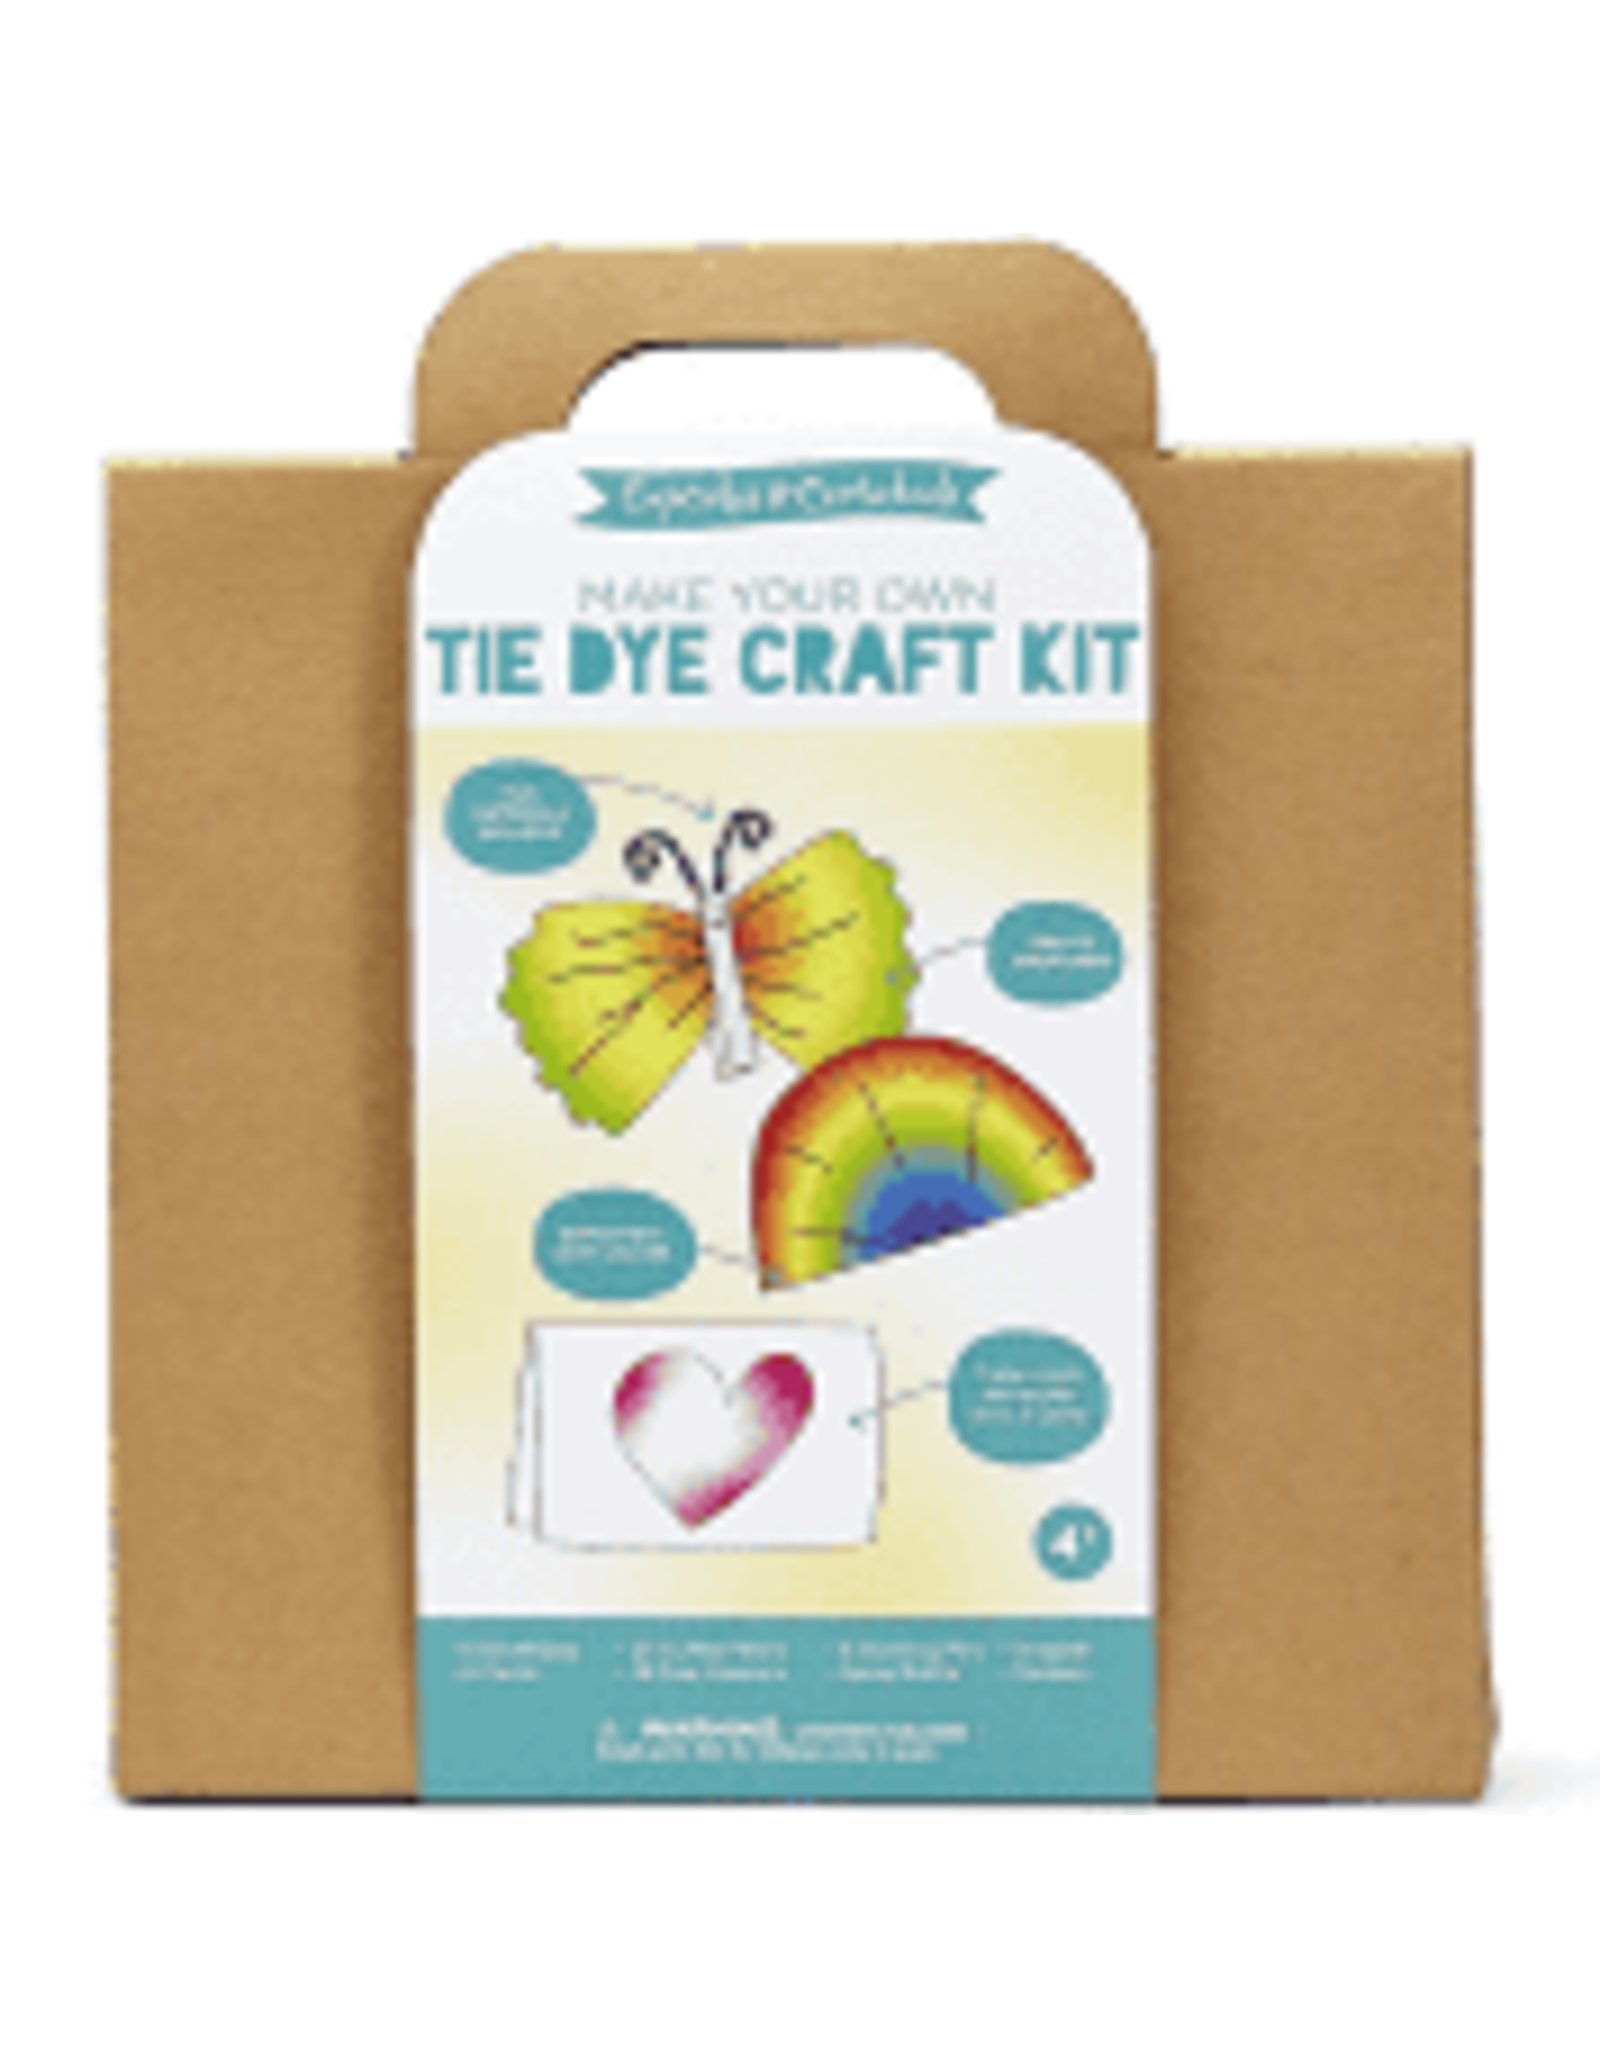 Cupcakes & Cartwheels myo Tie Dye craft kit